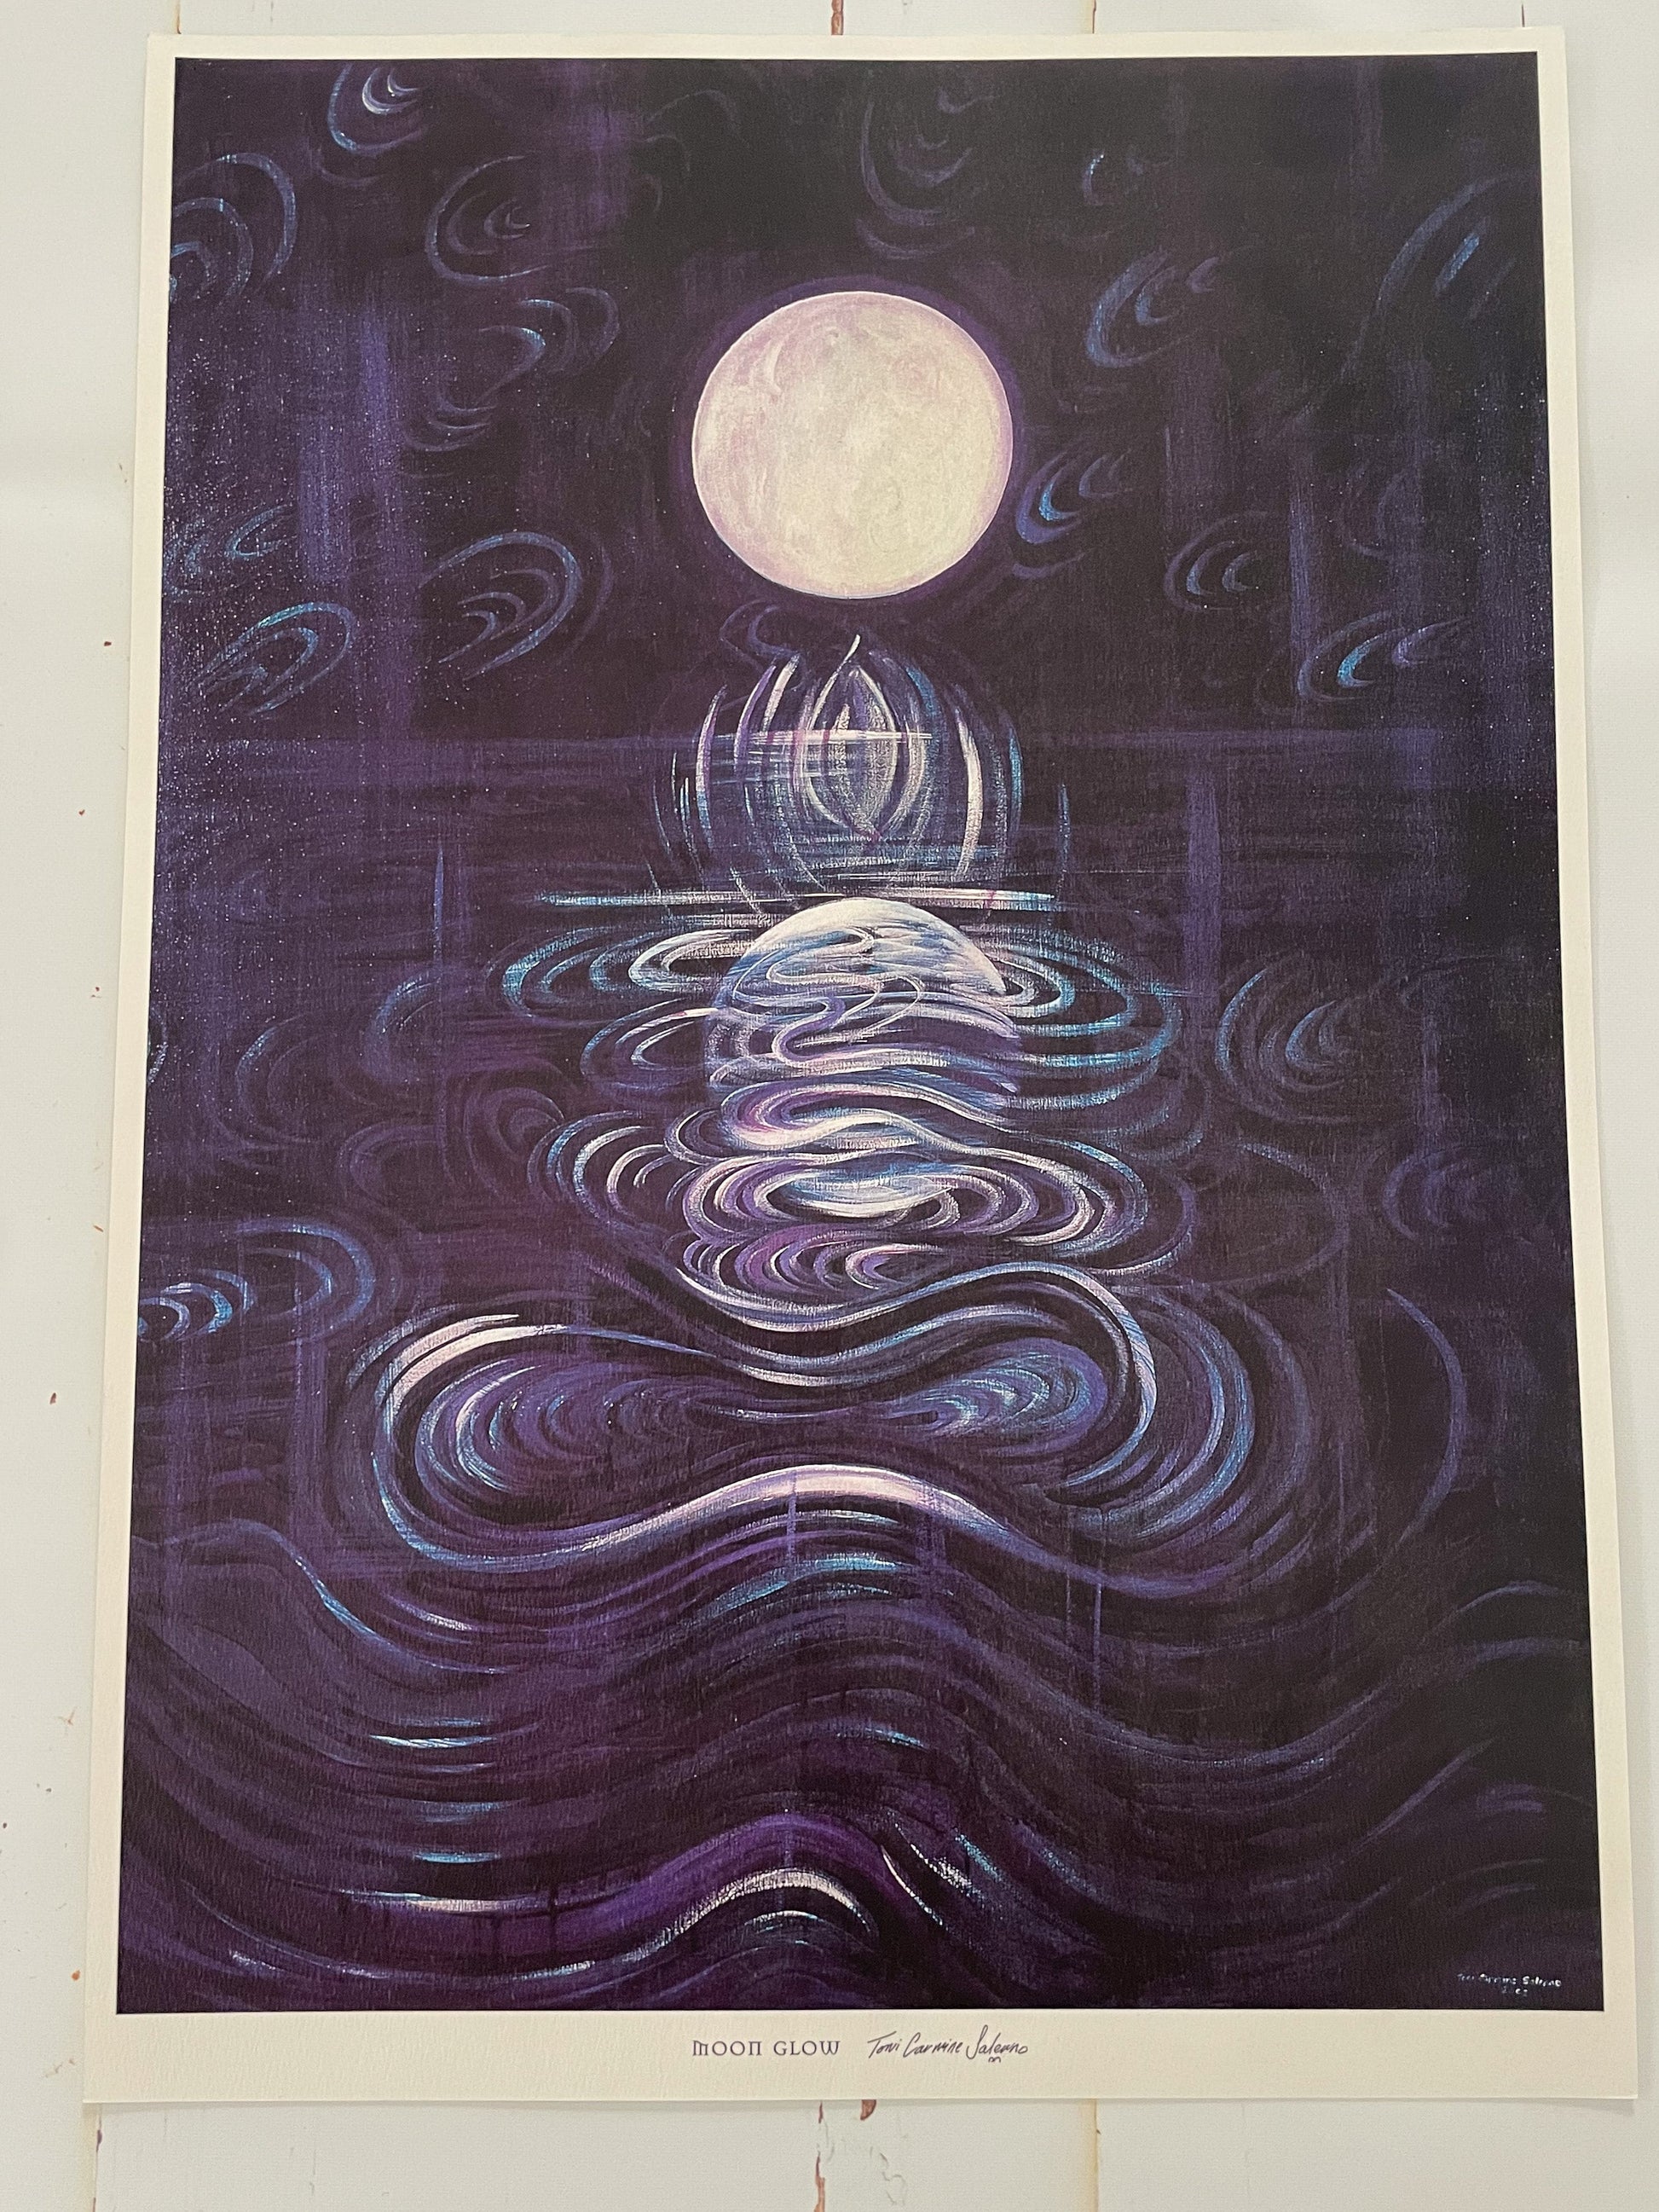 Moon Glow Print by Toni Carmine Salerno-Happily Zen